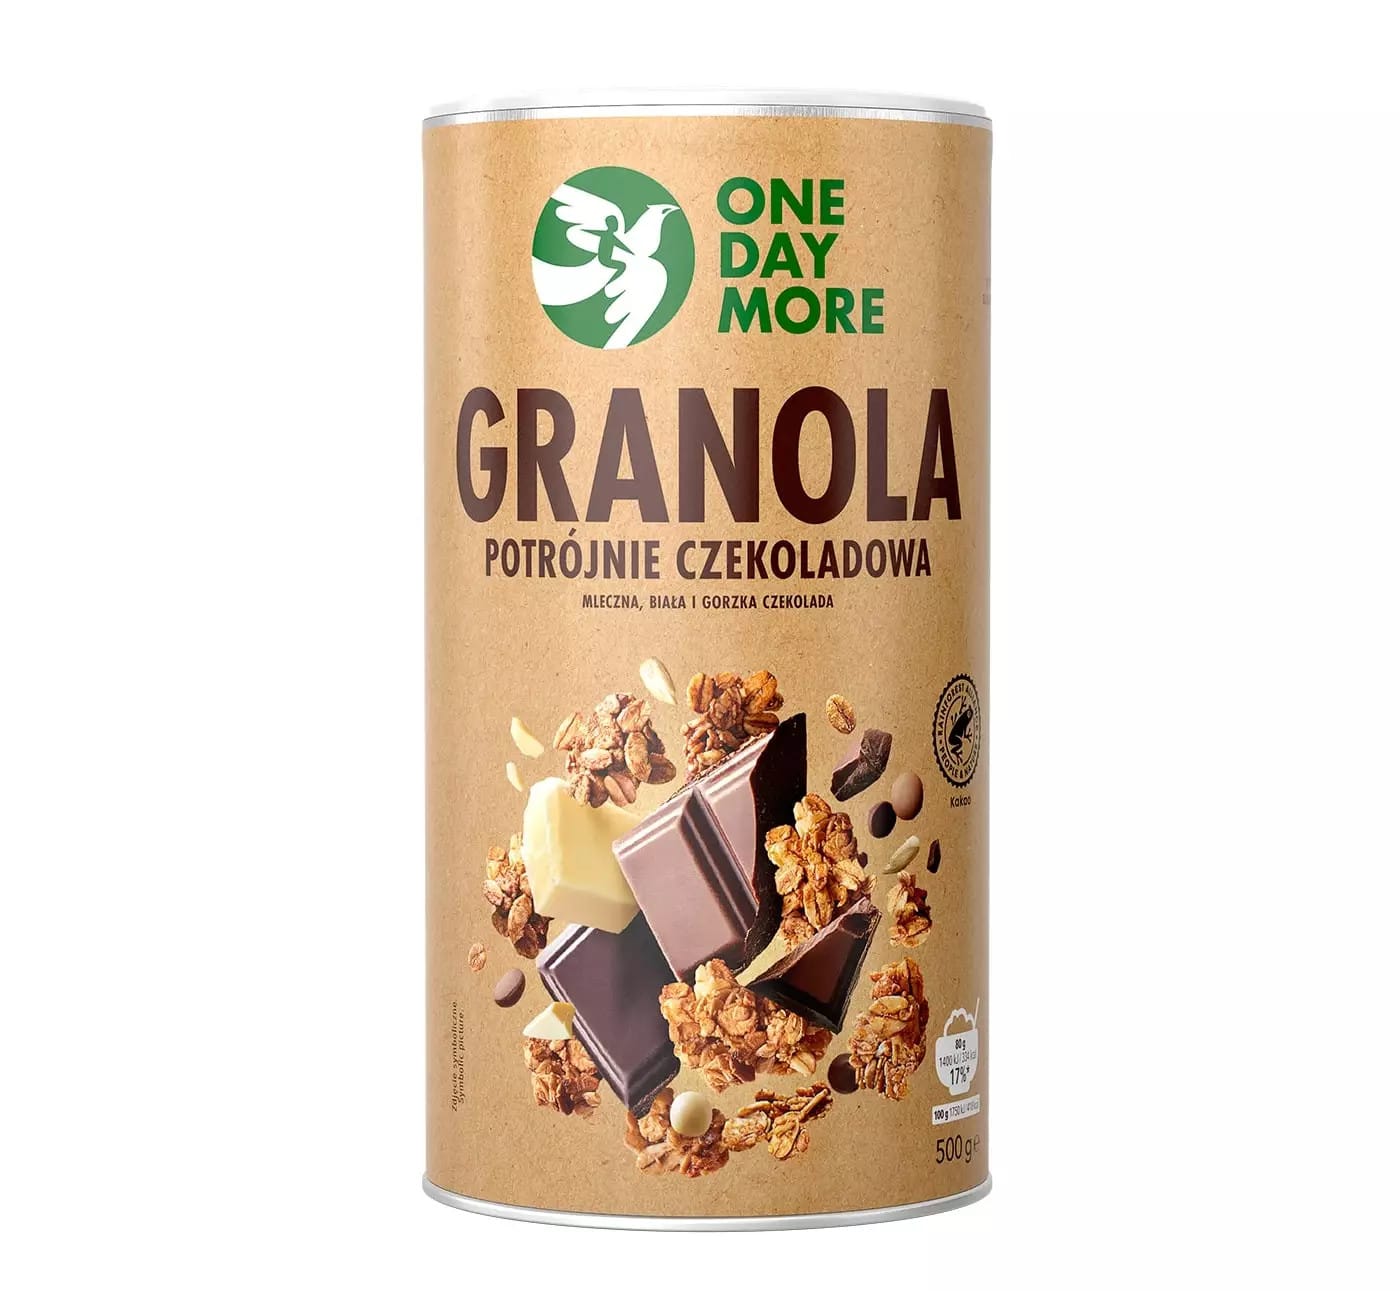 granola-potrojna-czekolada-tuba-pl-onedaymore-prod